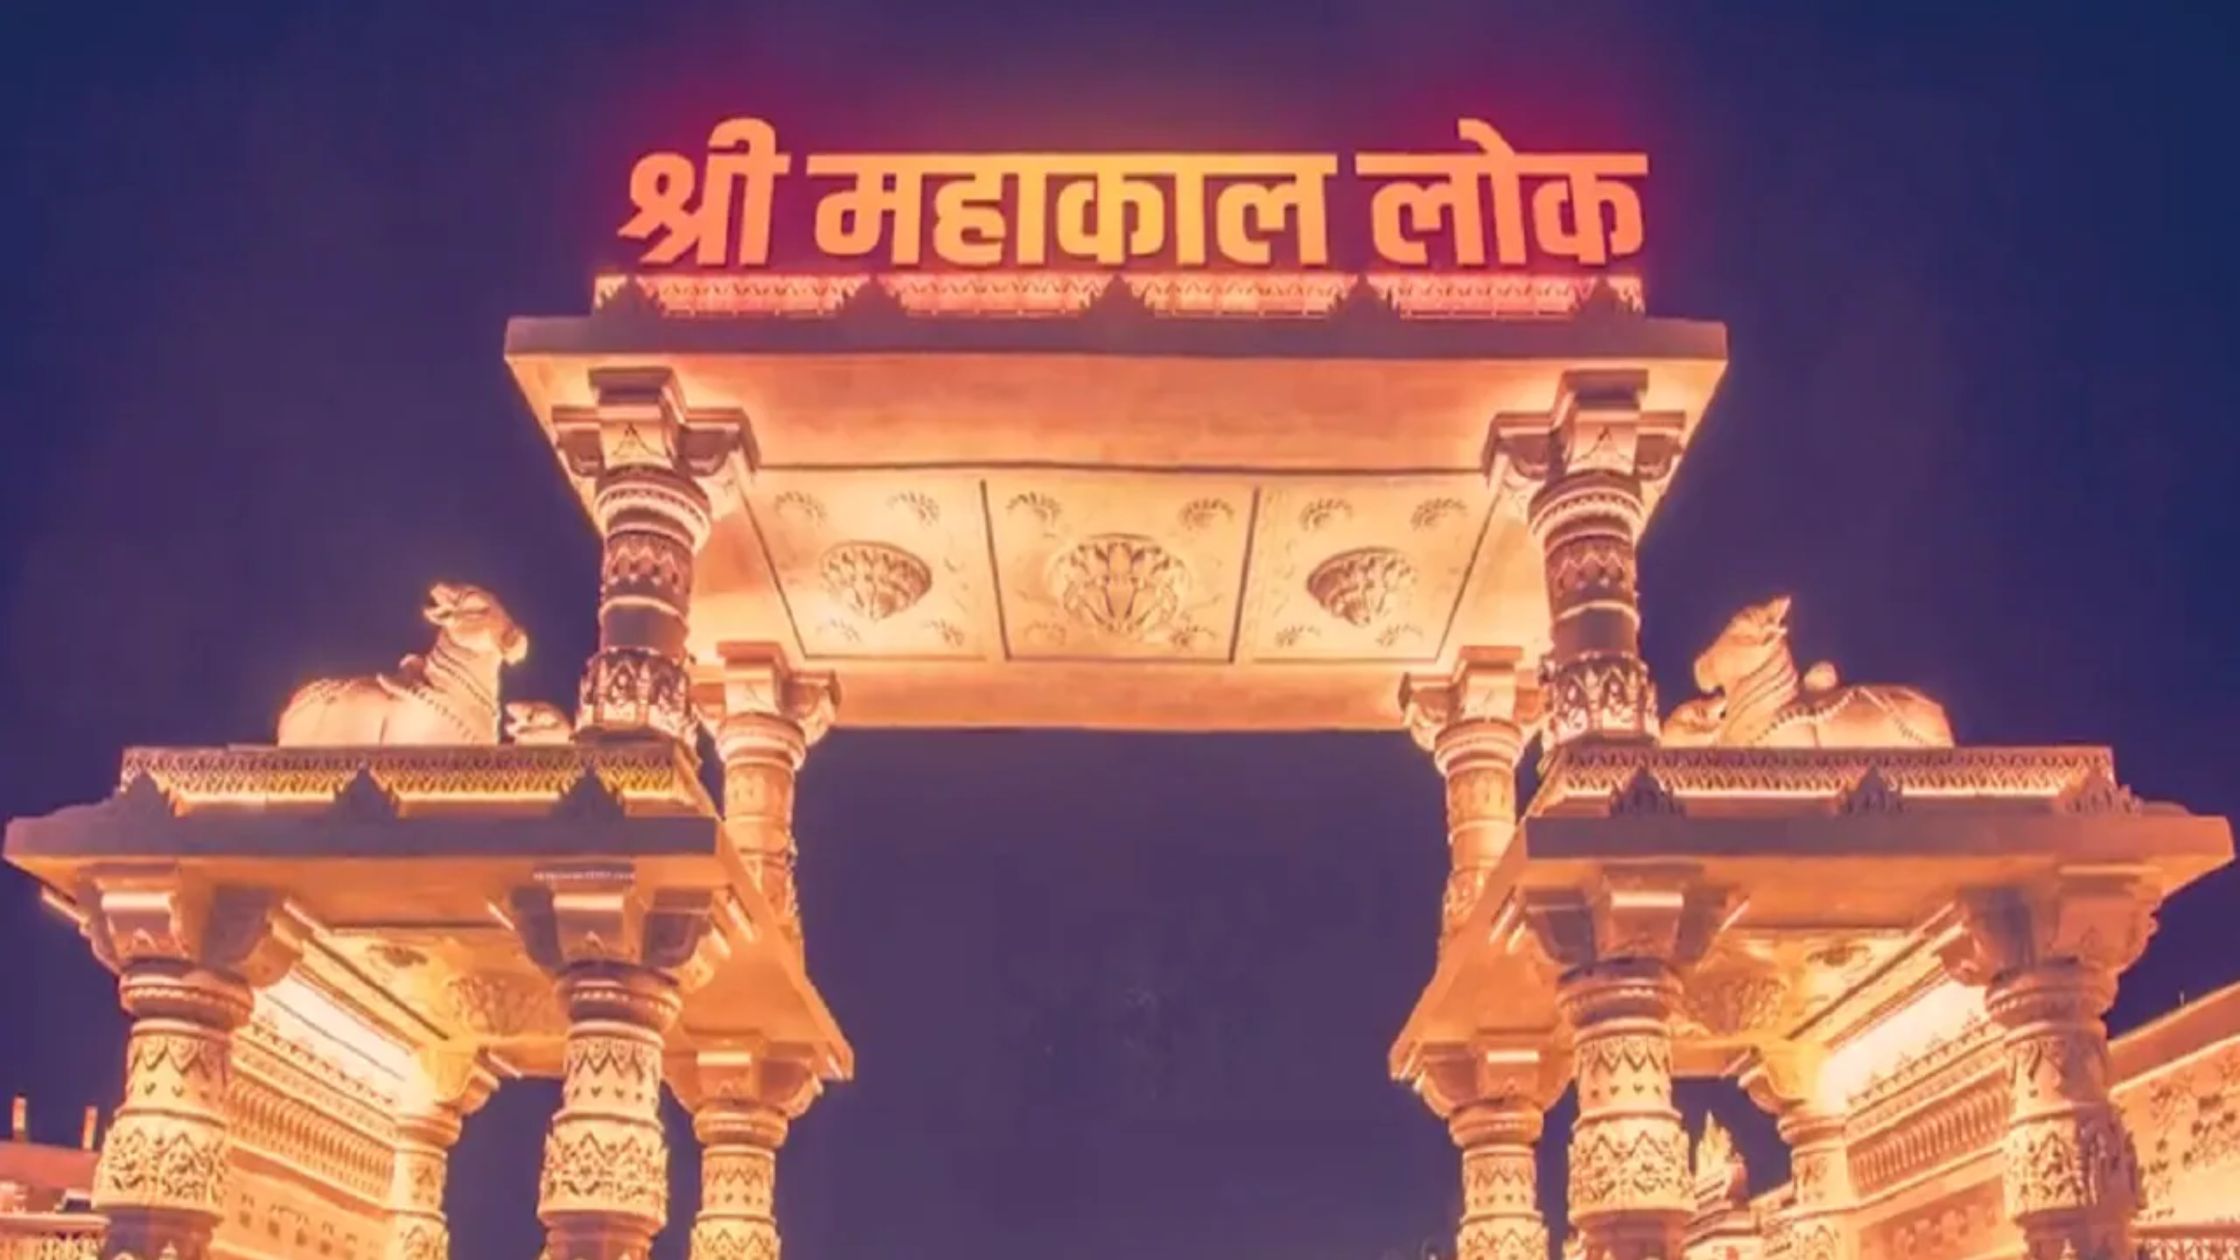 Mahakal Lok Corridor in Ujjain – Everything You Need to Know